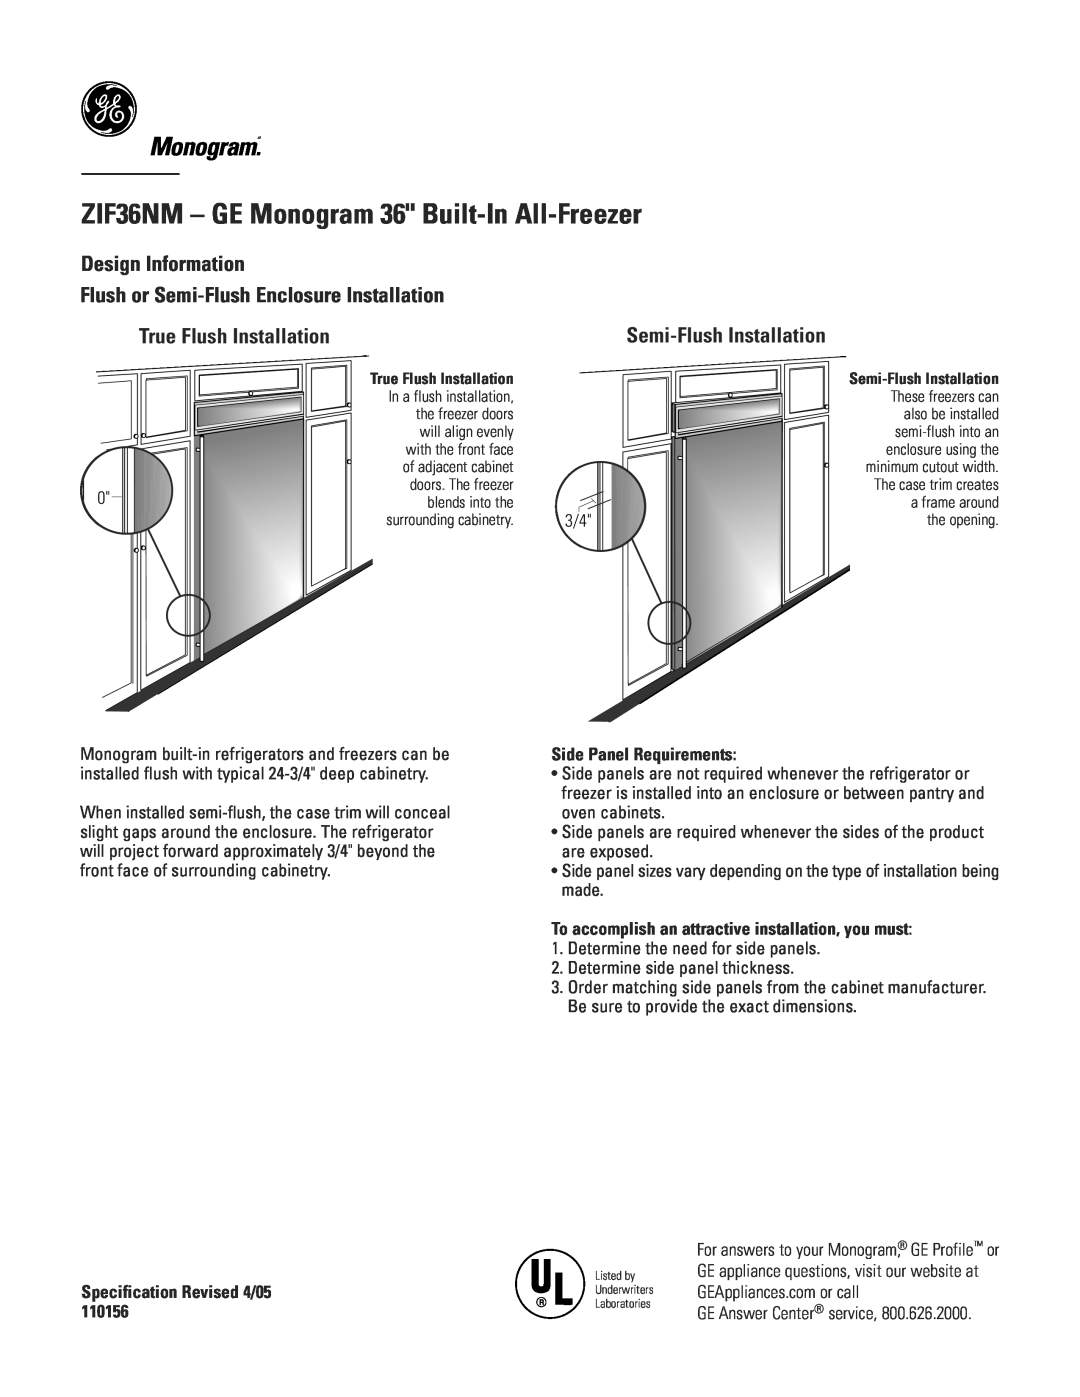 GE ZIF36NM - GE Monogram 36 Built-In All-Freezer, Monogram.“, True Flush Installation, Semi-Flush Installation 